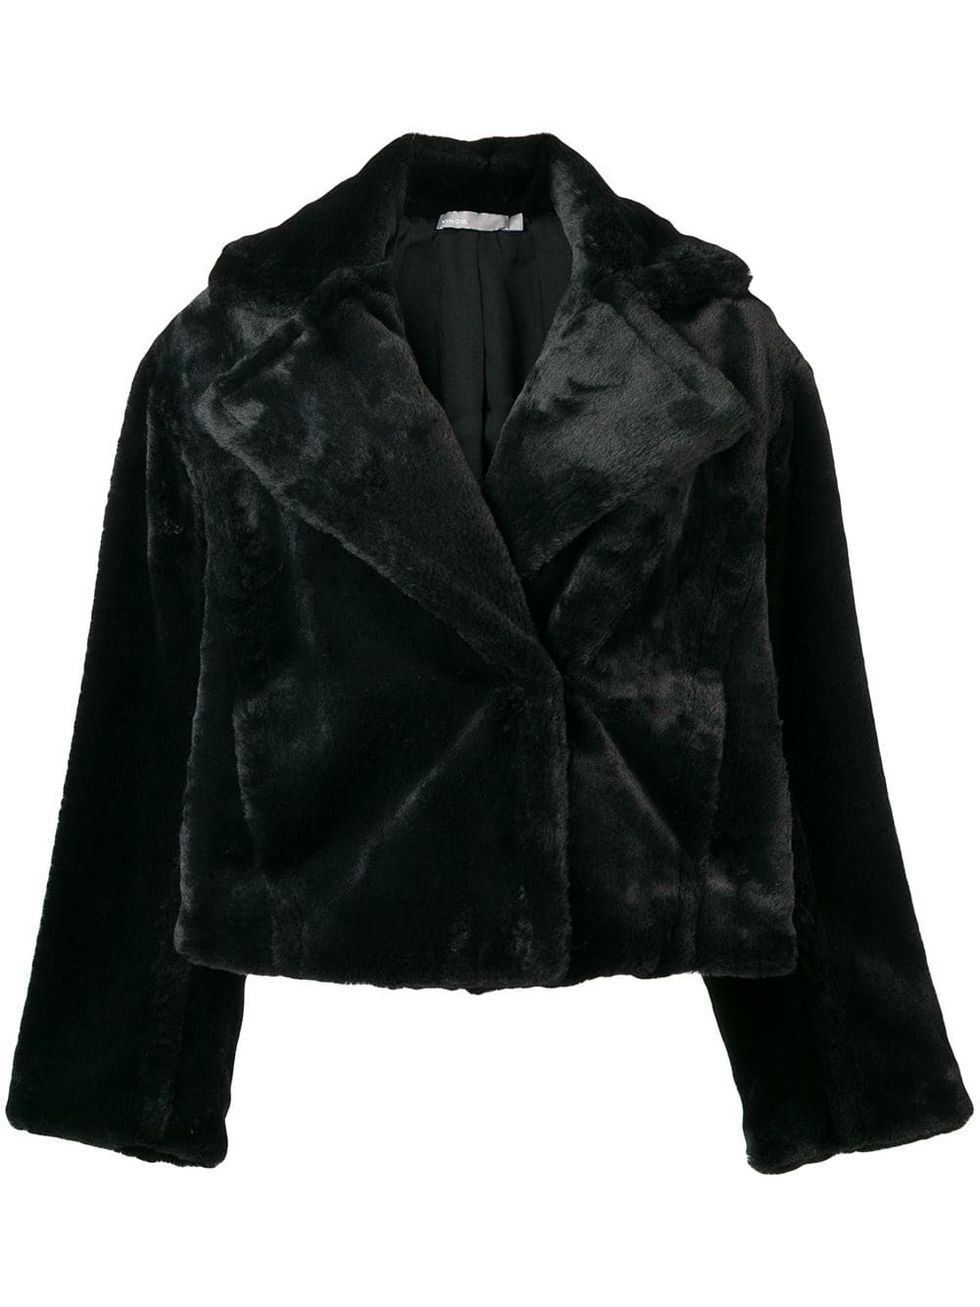 Cropped Black Faux Fur Jacket